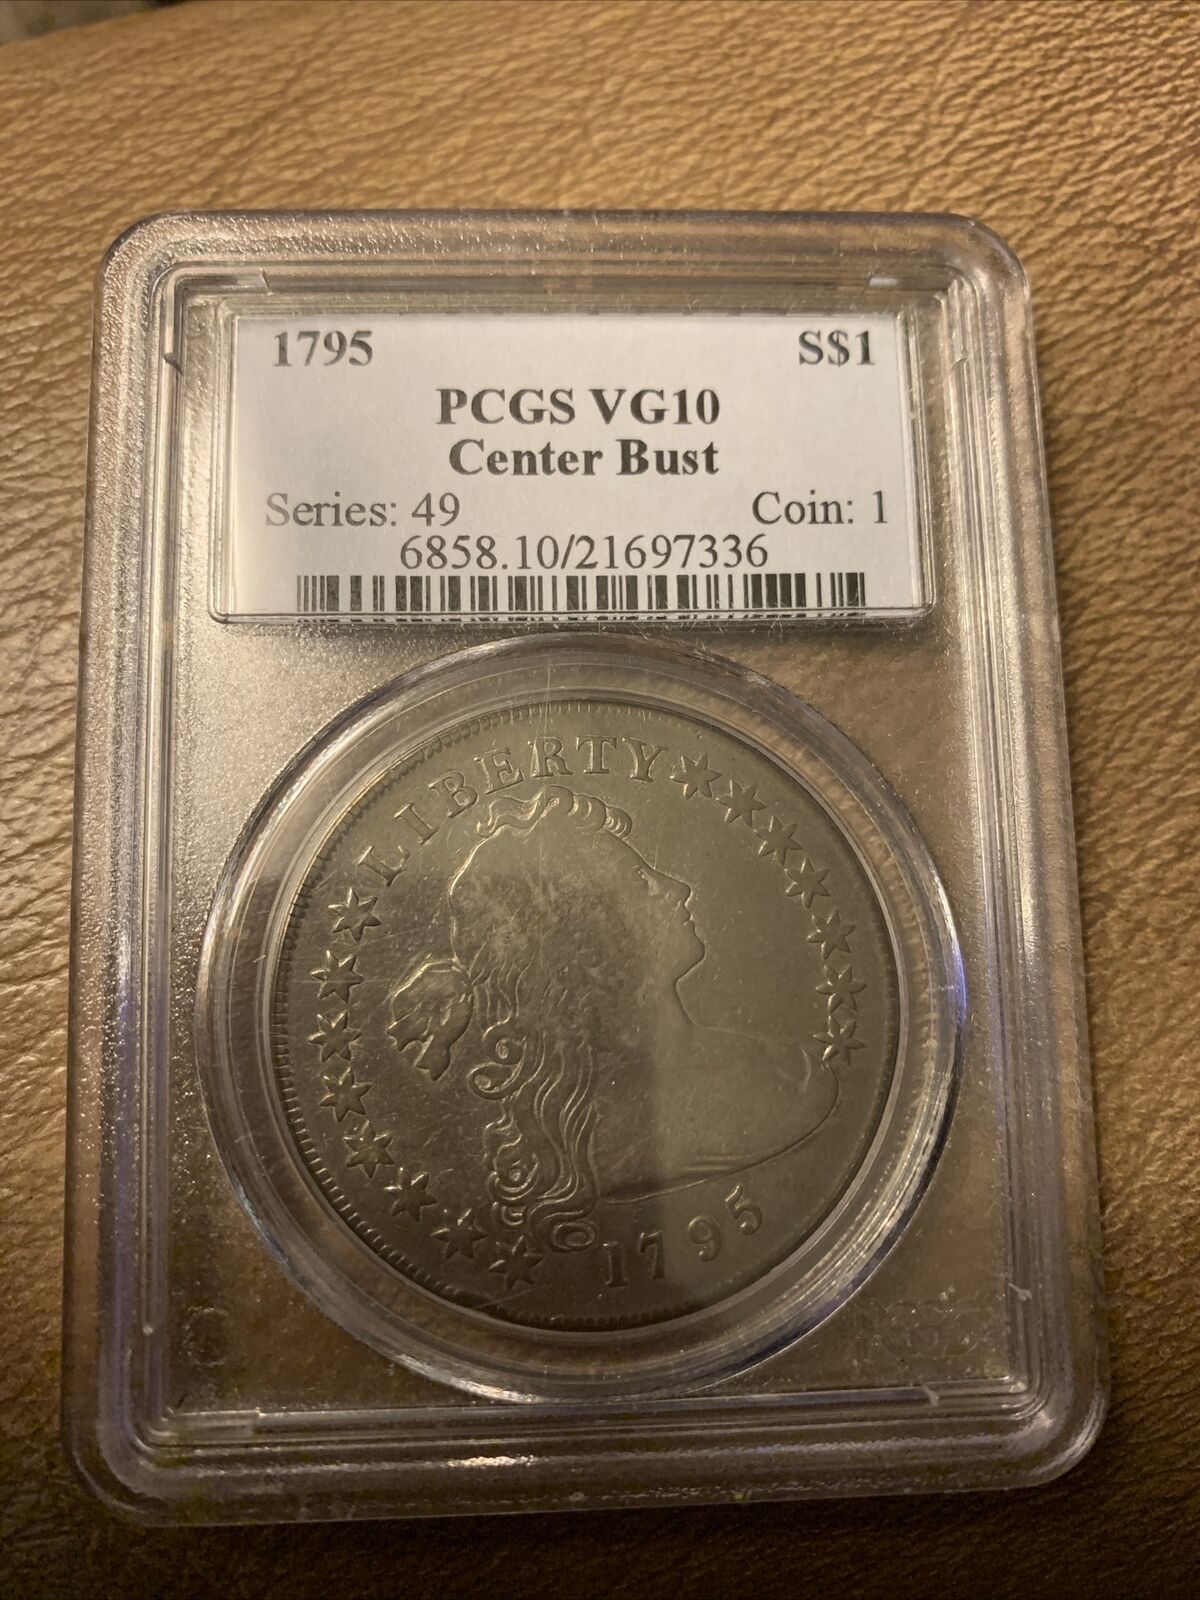 Fine Details 1795 Draped Bust Dollar - Silver $1 - Graded Pcgs Vg10 Center Bust